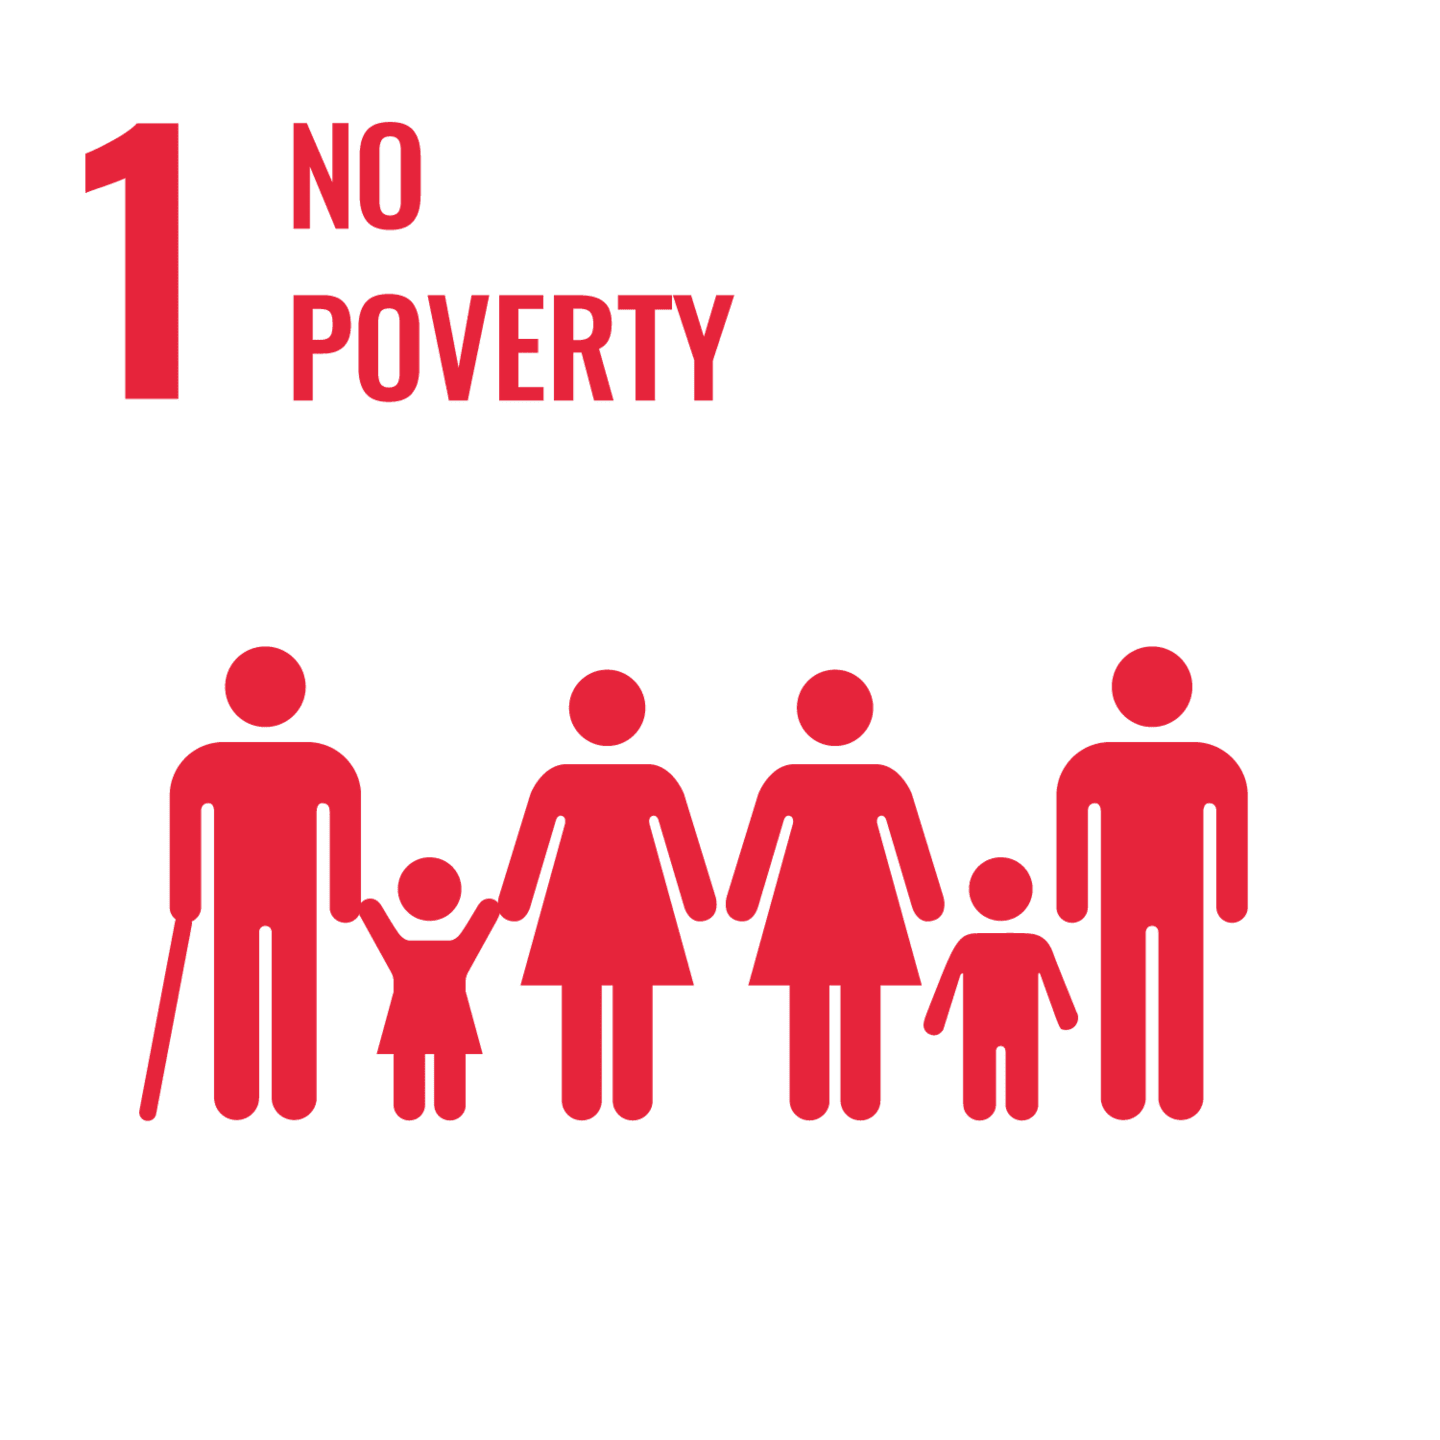 UN Sustainable Development Goal 1: No Poverty